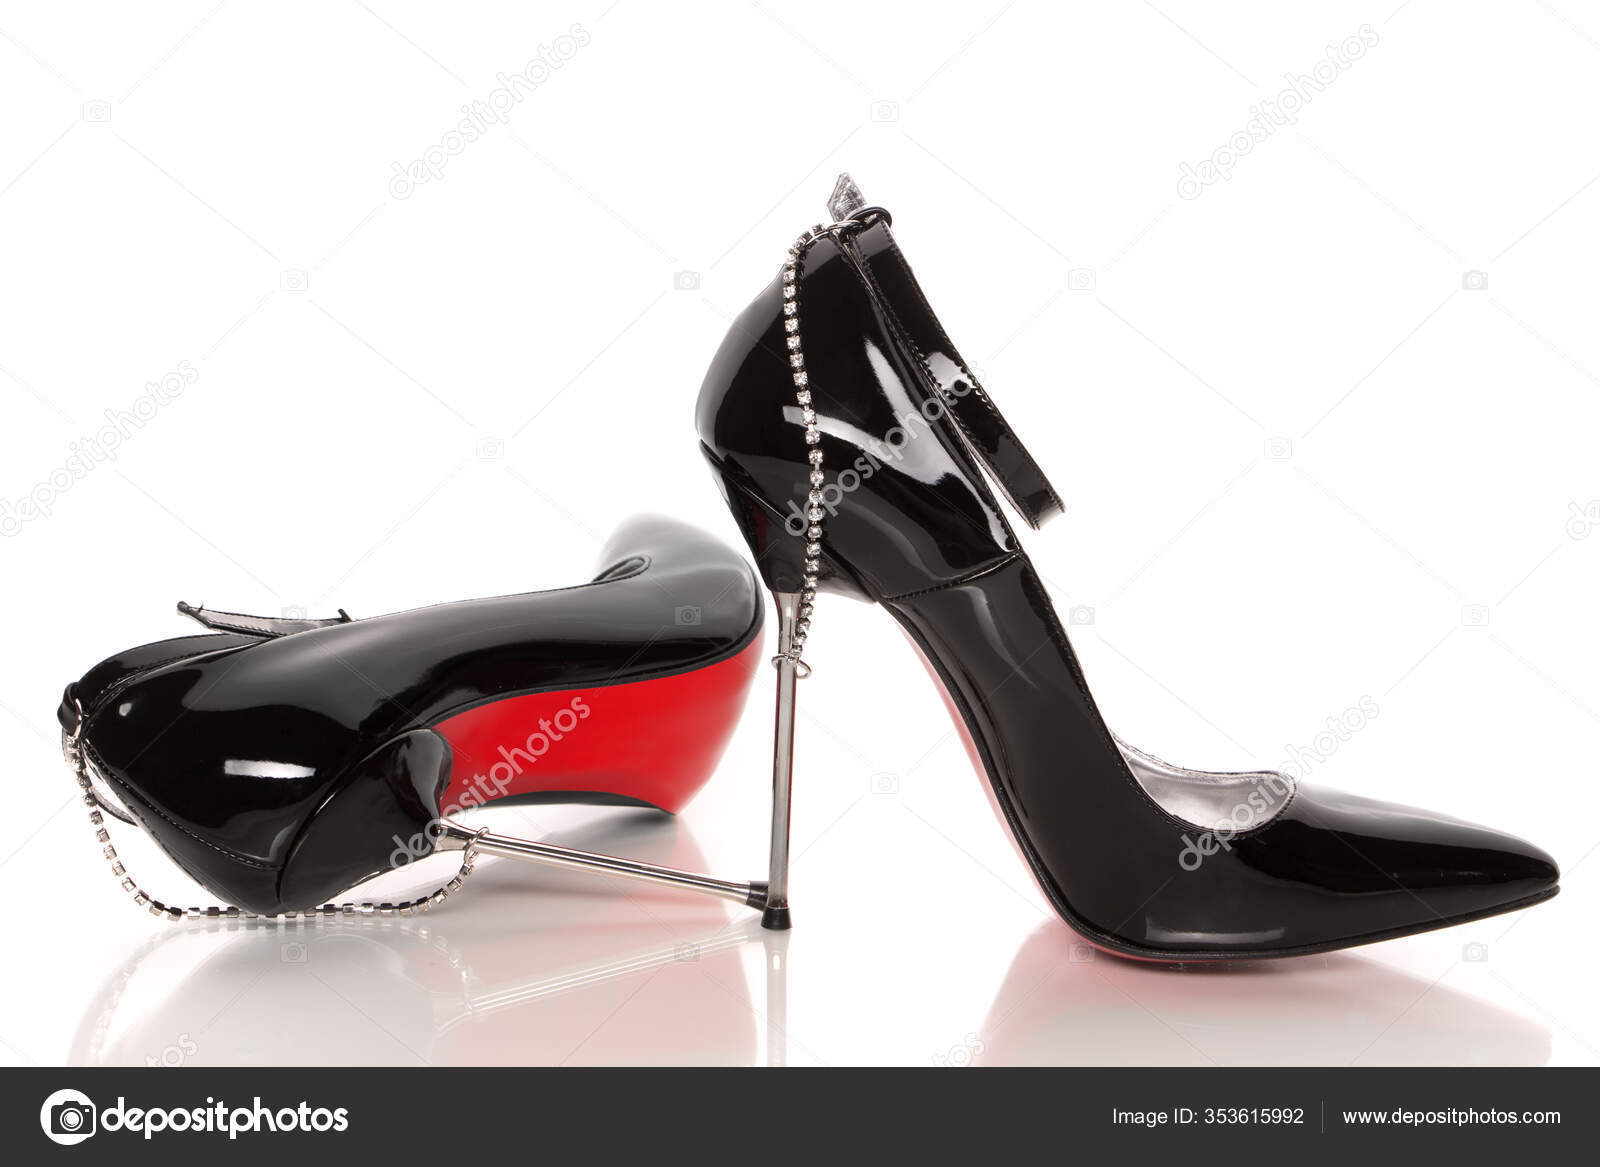 stylish women's shoes